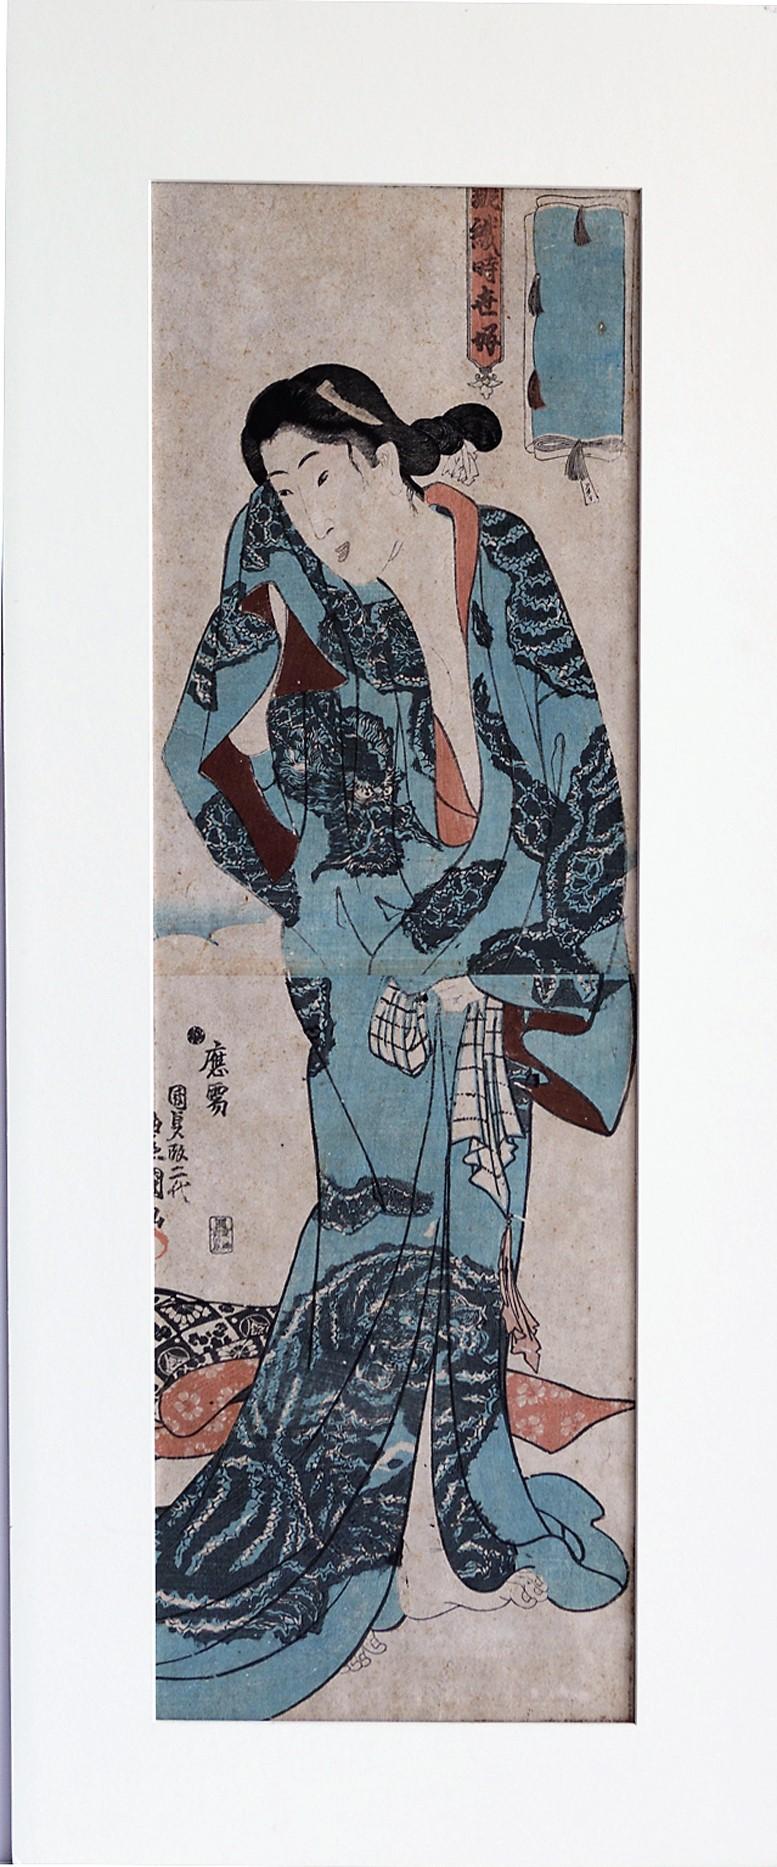 [After the Bath] - Gray Portrait Print by Utagawa Kunisada (Toyokuni III)